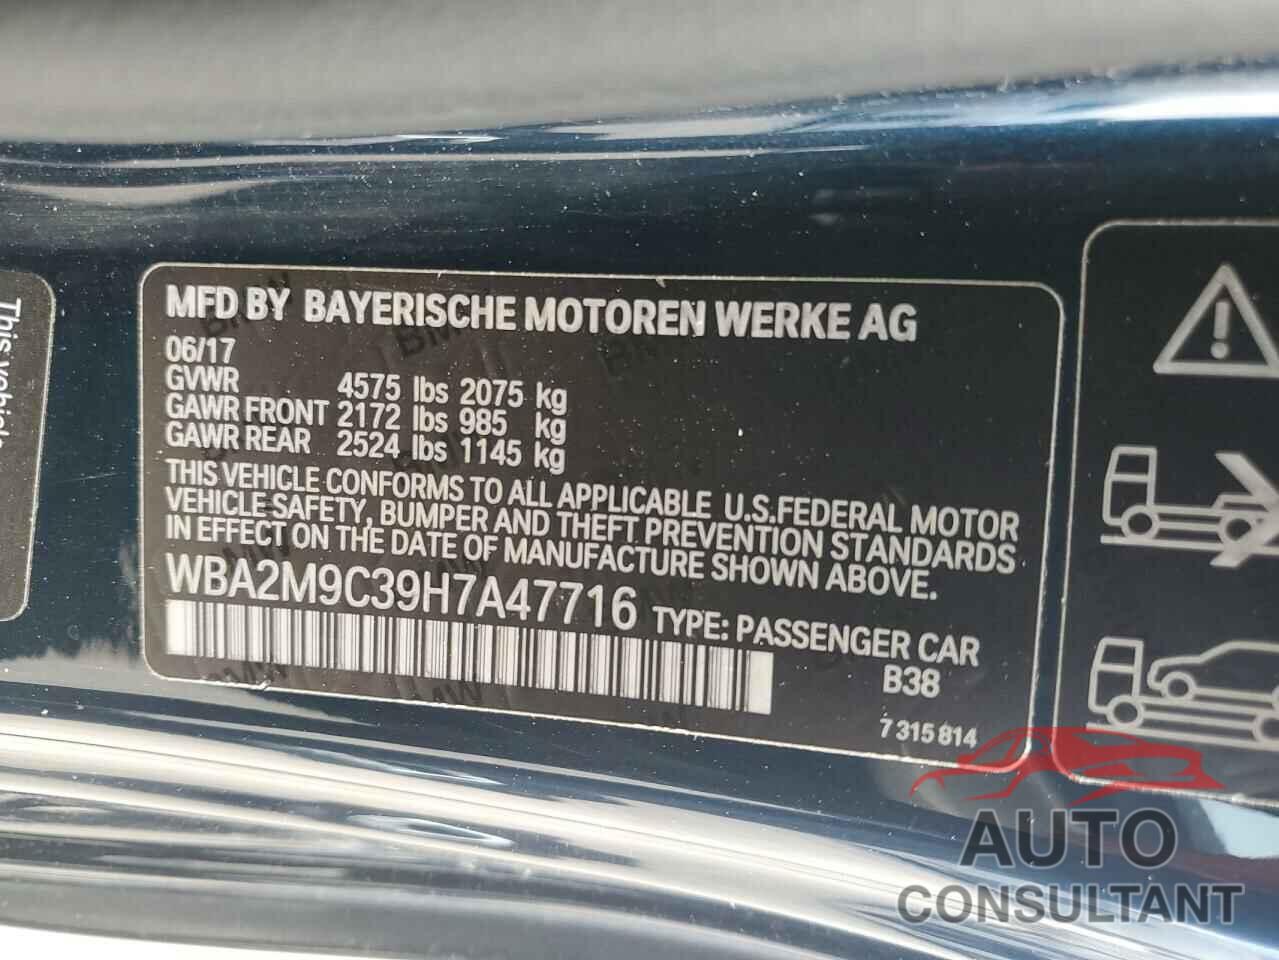 BMW 2 SERIES 2017 - WBA2M9C39H7A47716